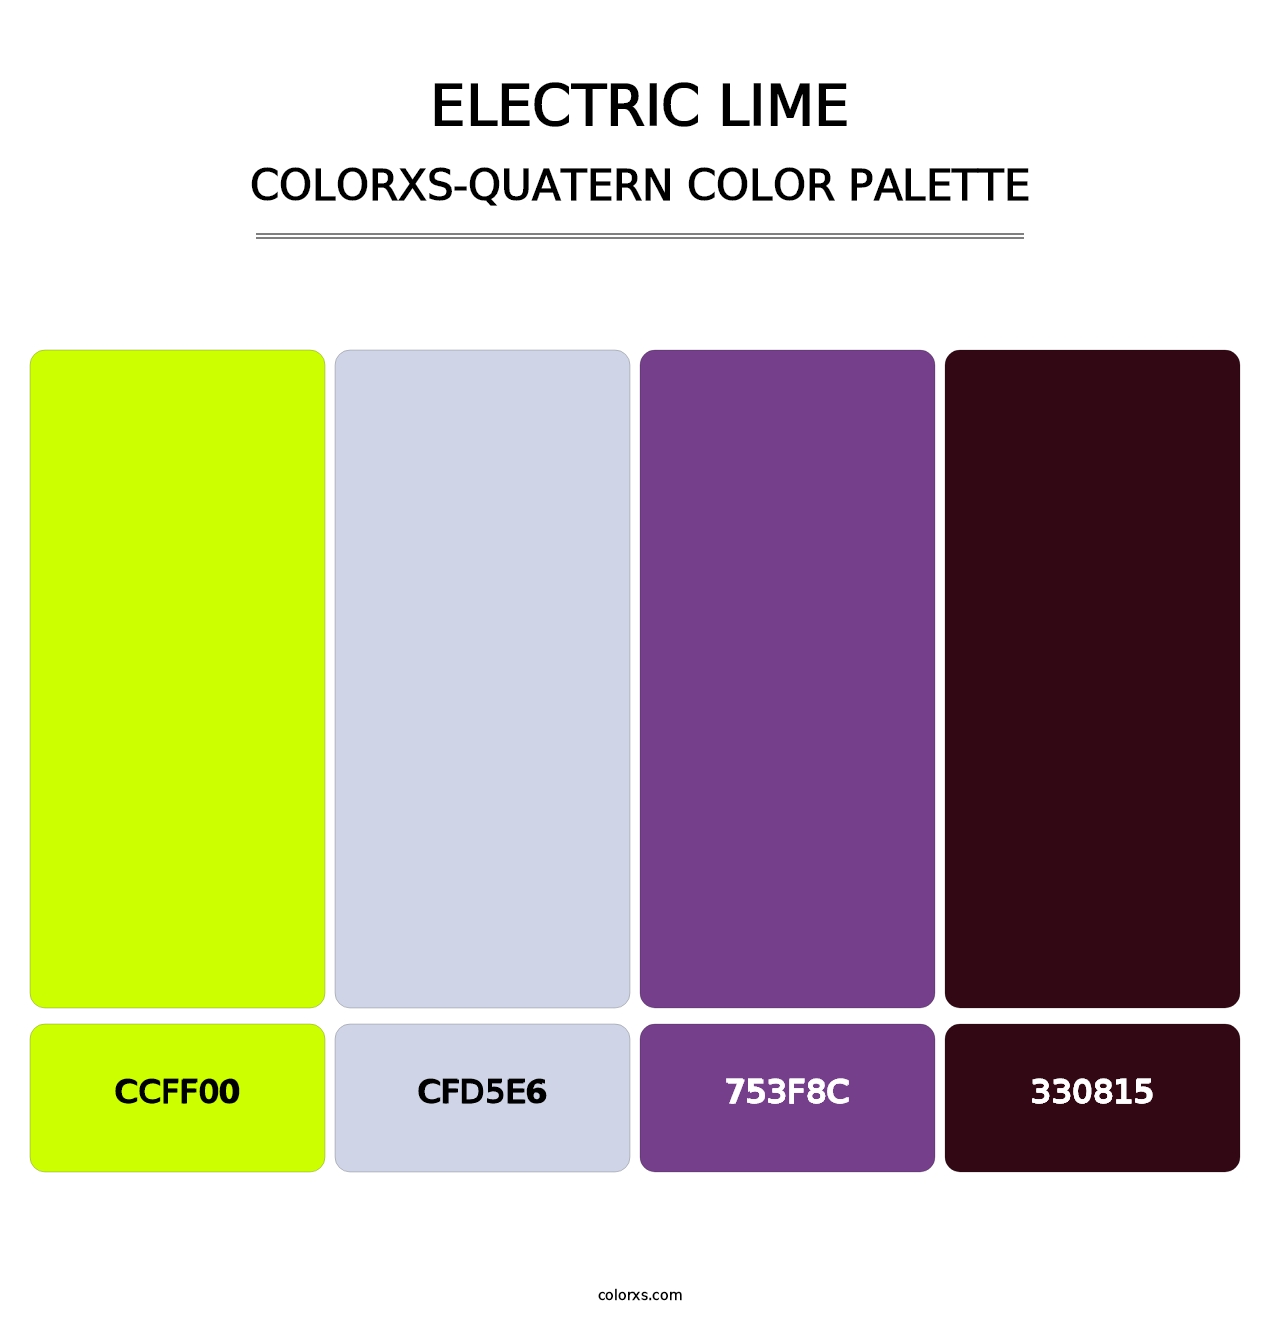 Electric Lime - Colorxs Quatern Palette